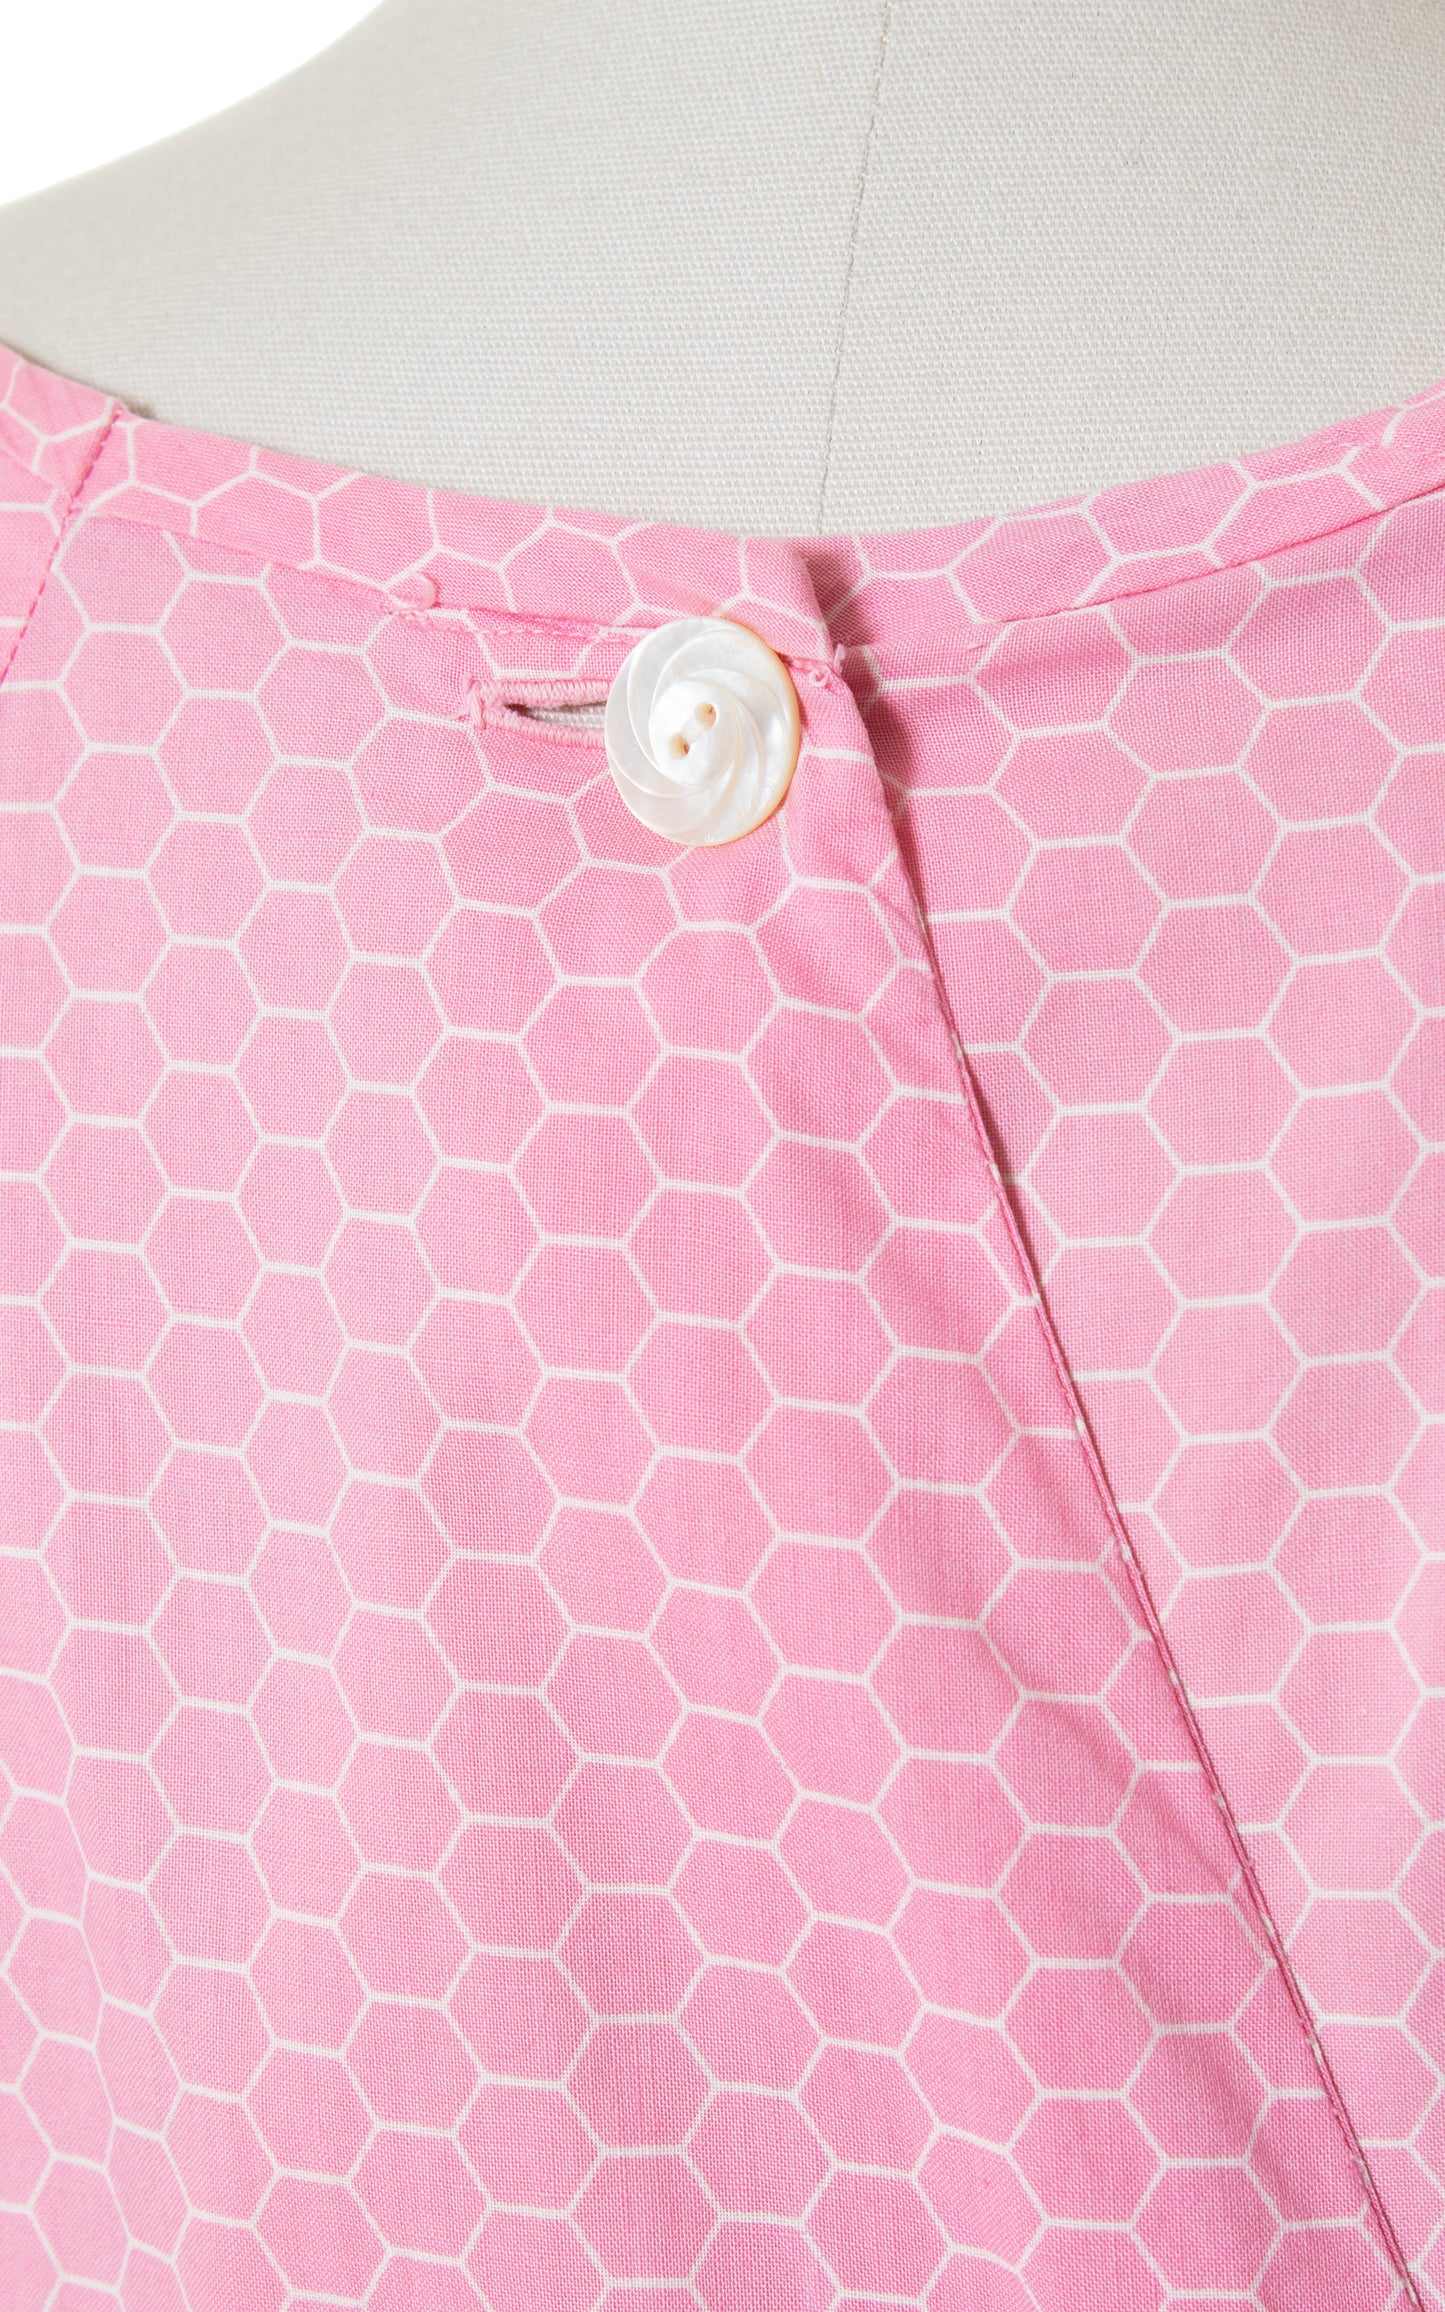 Vintage 50s 1950s SWIRL Bee Embroidered Novelty Print Wrap Day Dress Pink Cotton Pockets BirthdayLifeVintage